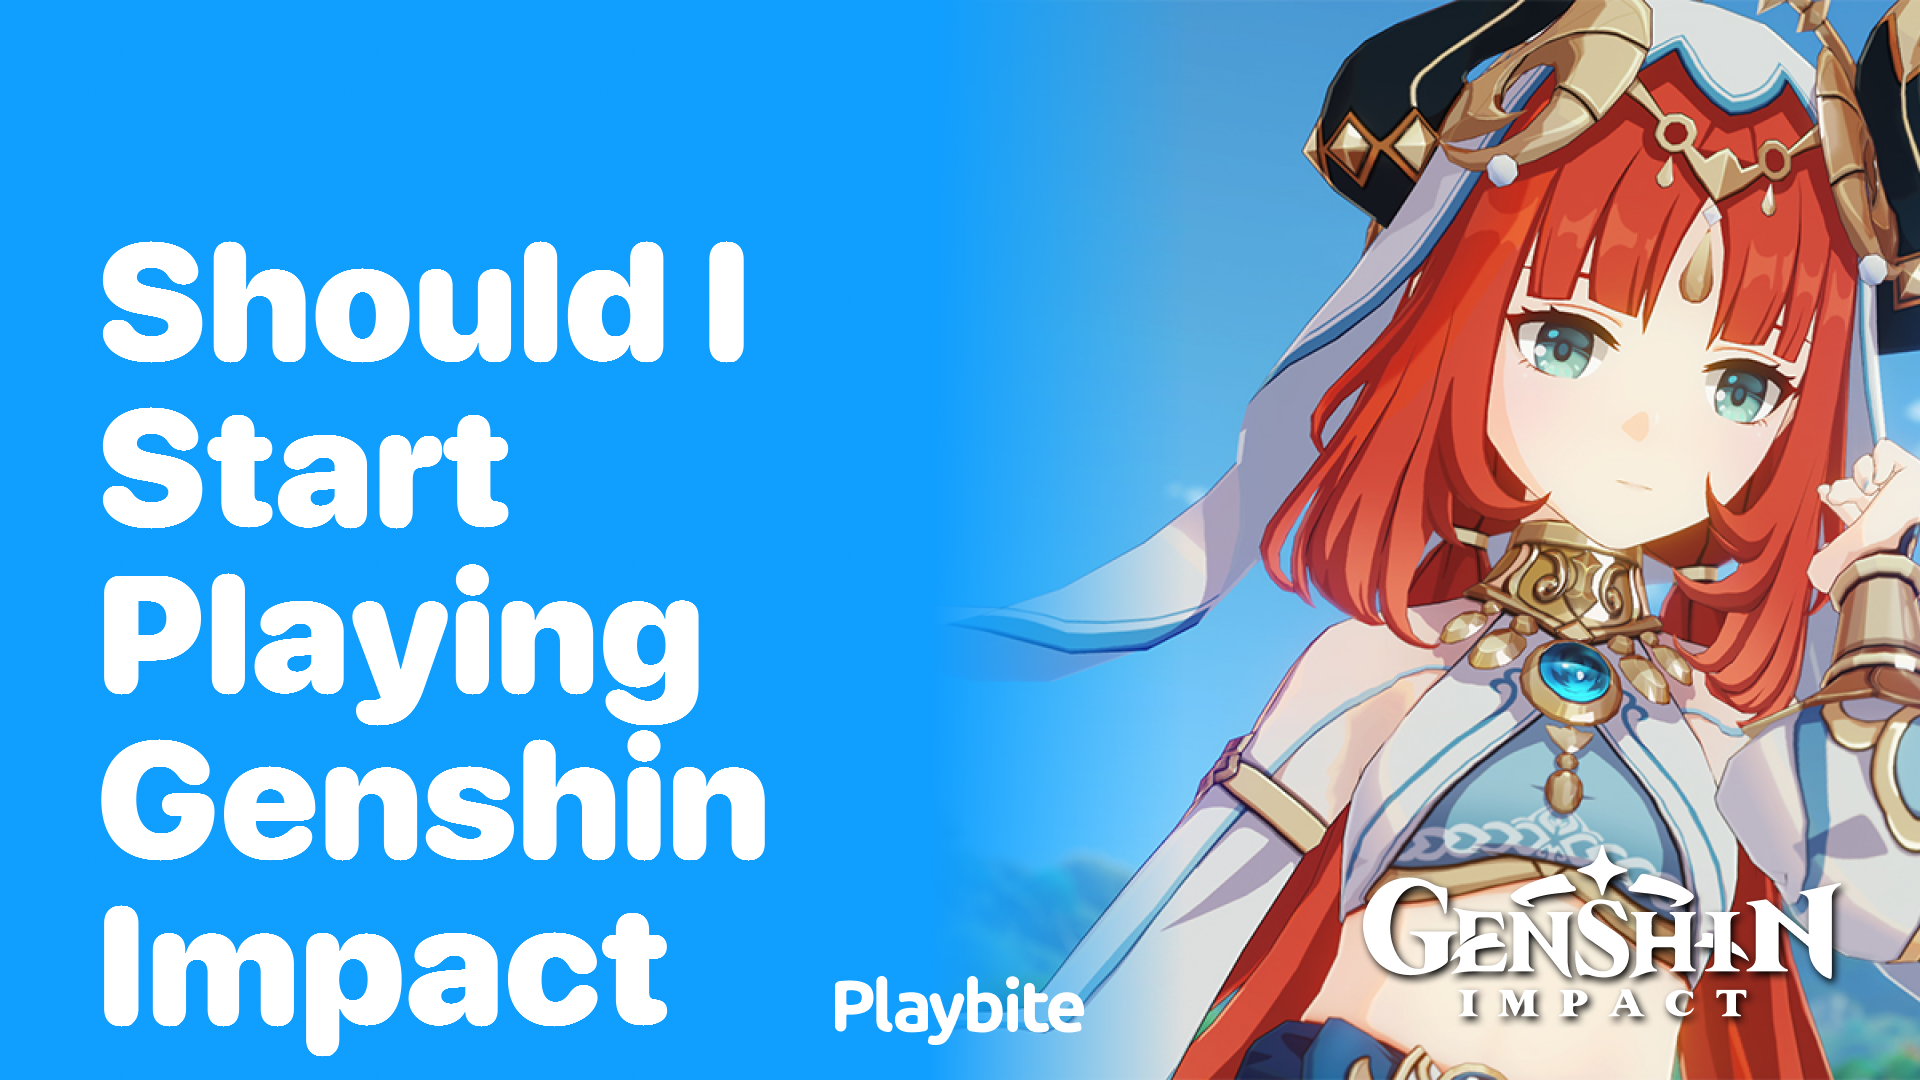 Should I Start Playing Genshin Impact?